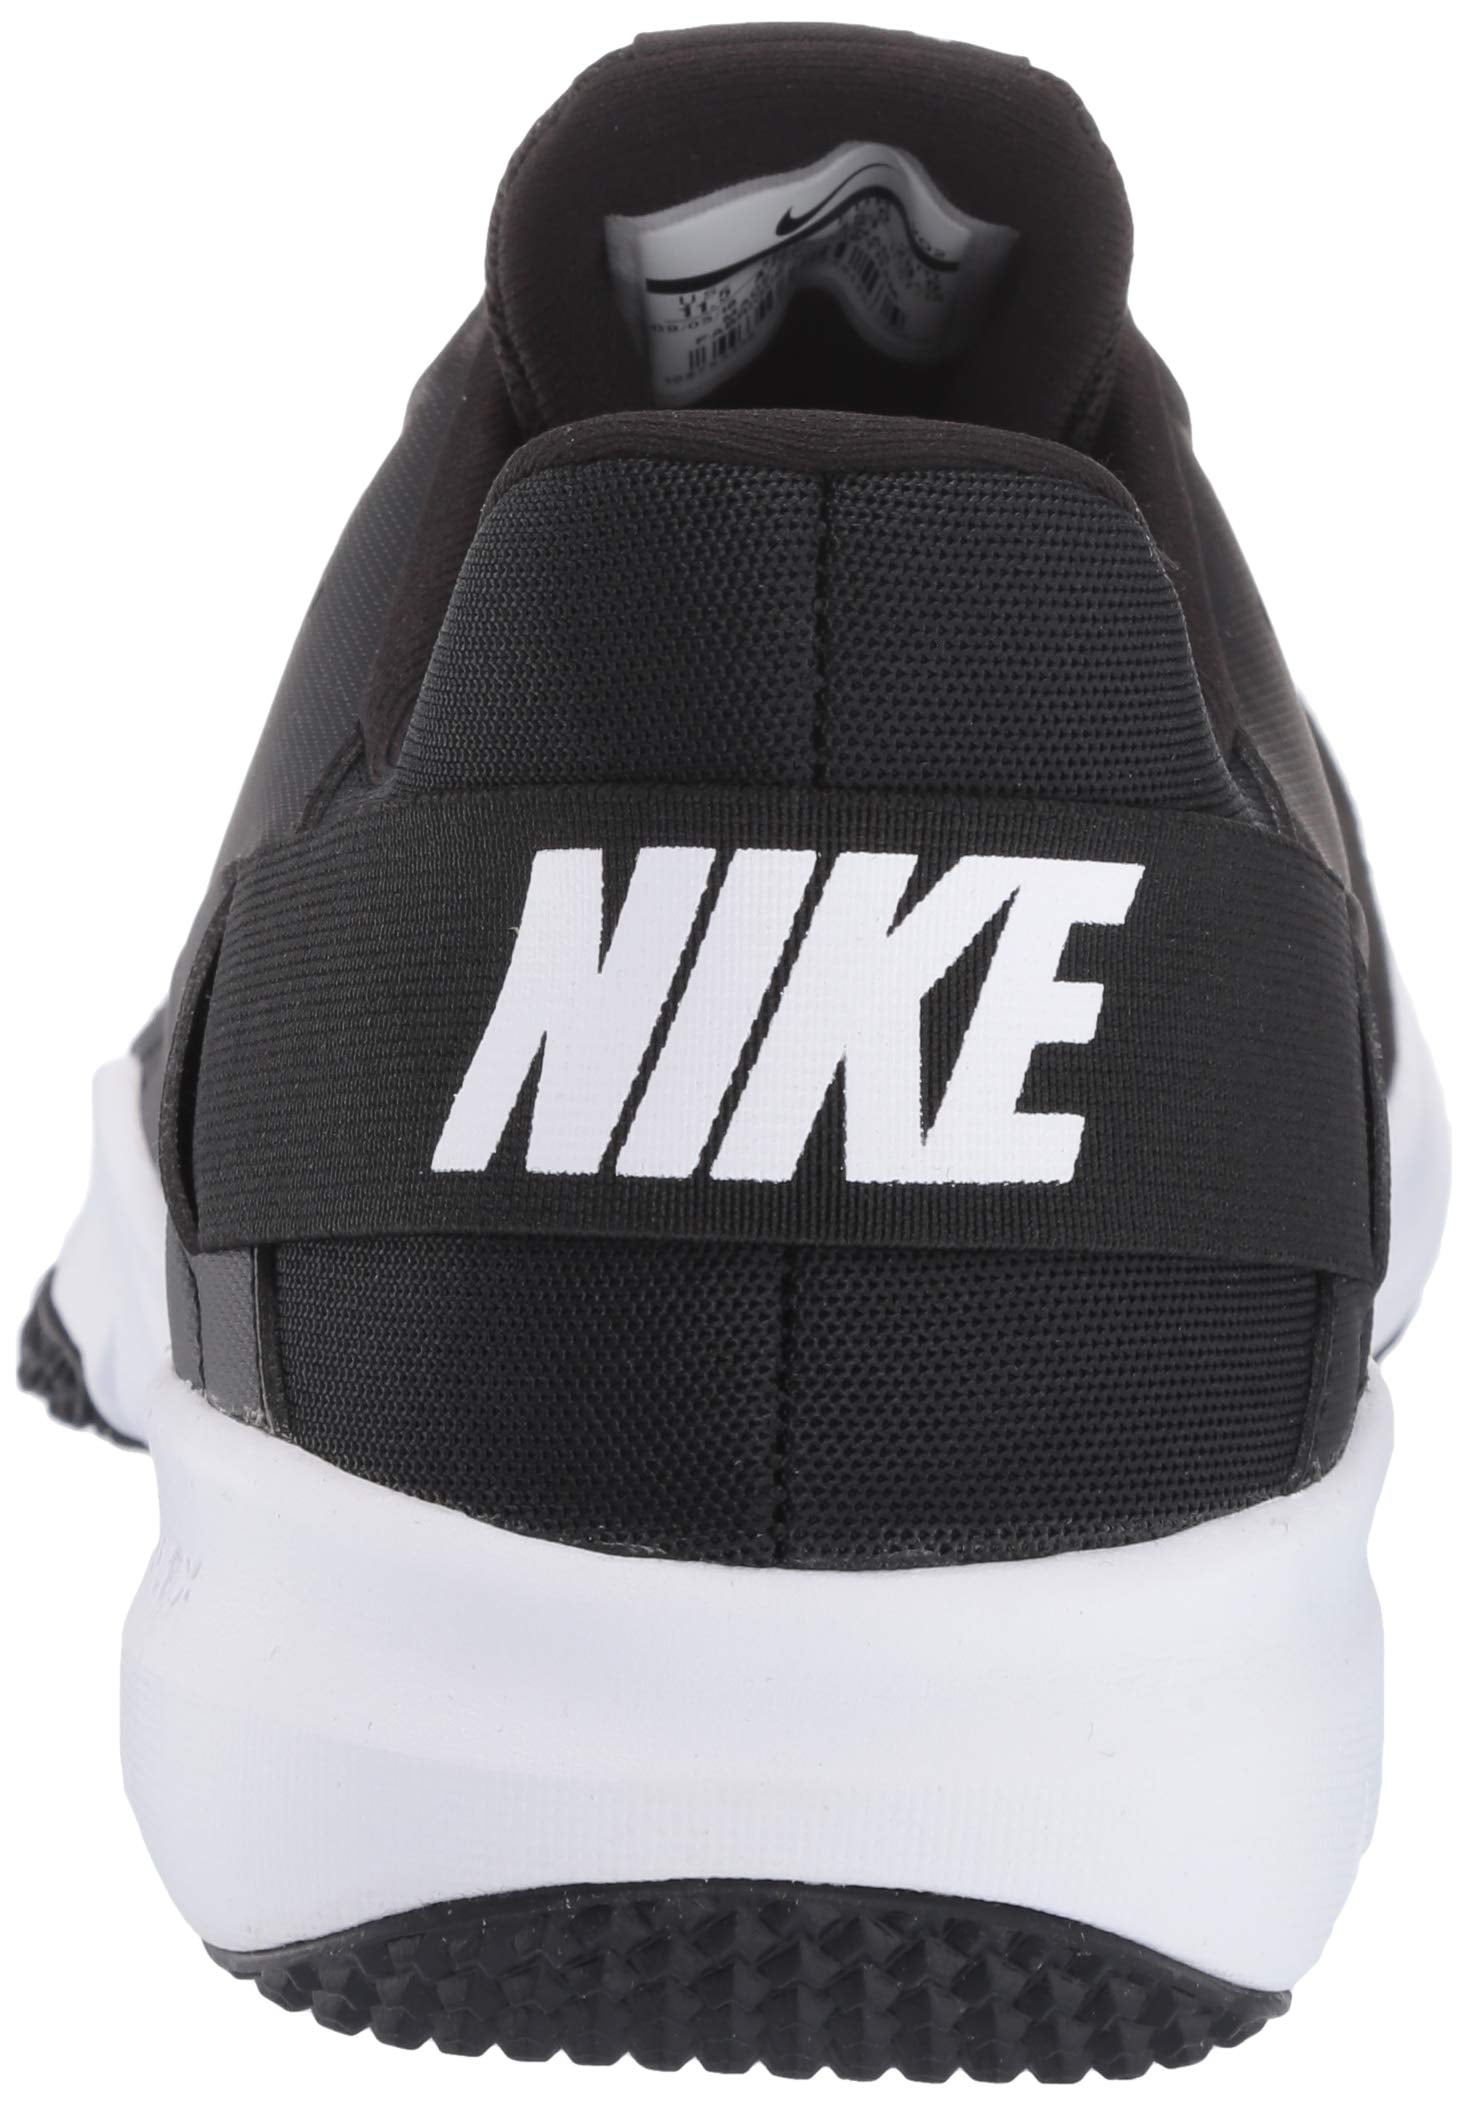 Nike Men's Flex Control Black/White/Anthracite Sneaker D(M) US - Walmart.com